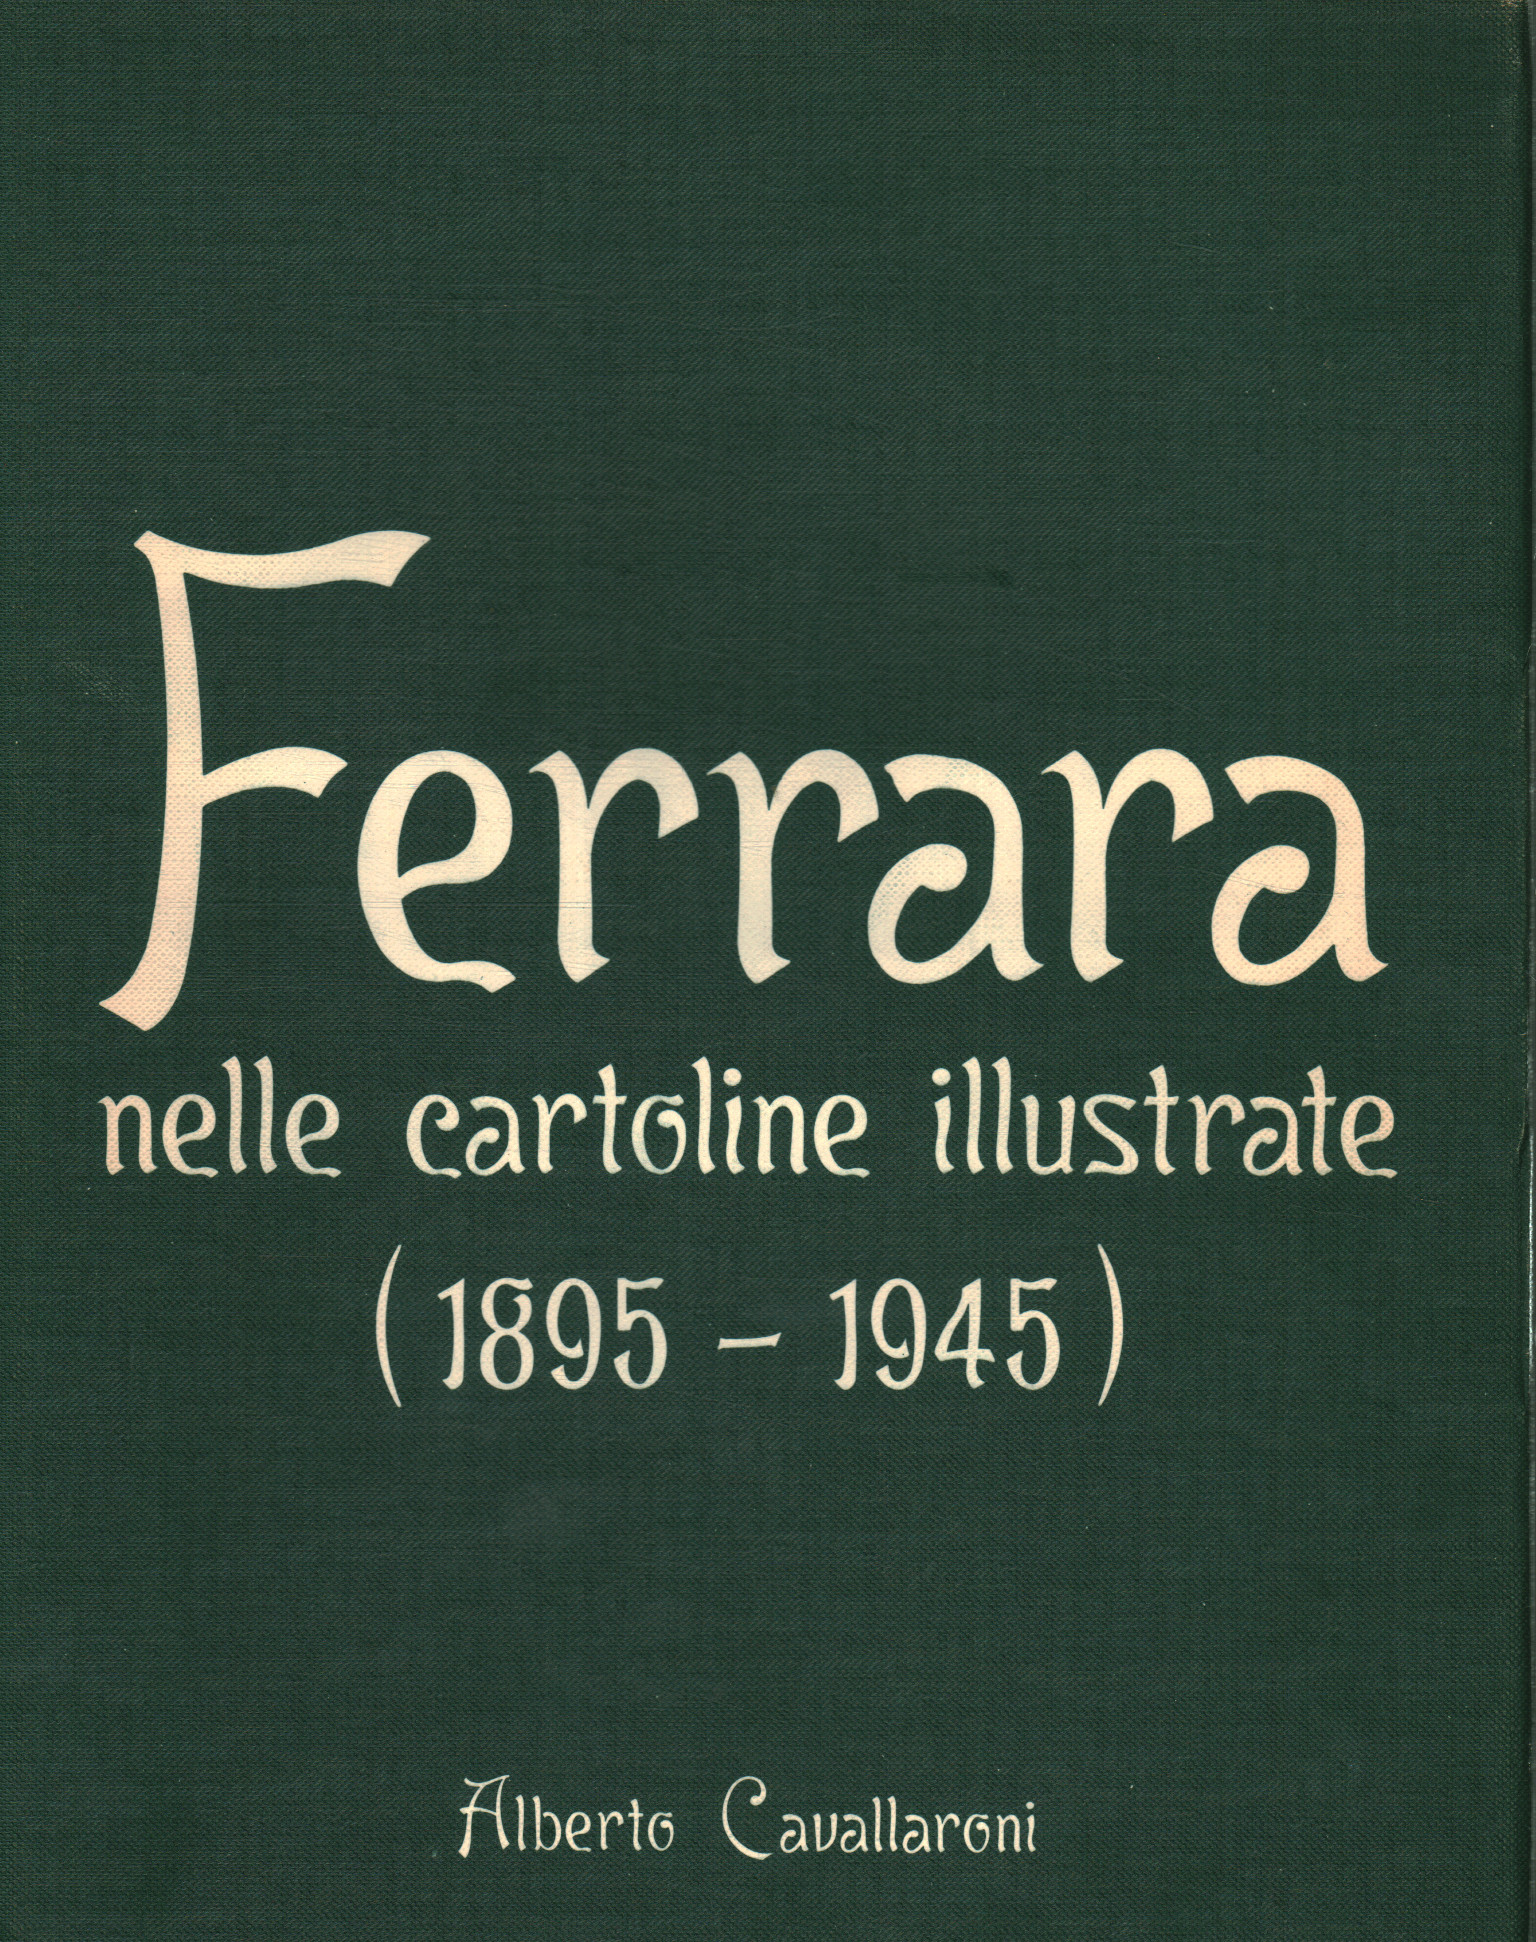 Ferrara in illustrierten Postkarten (1895-1895).